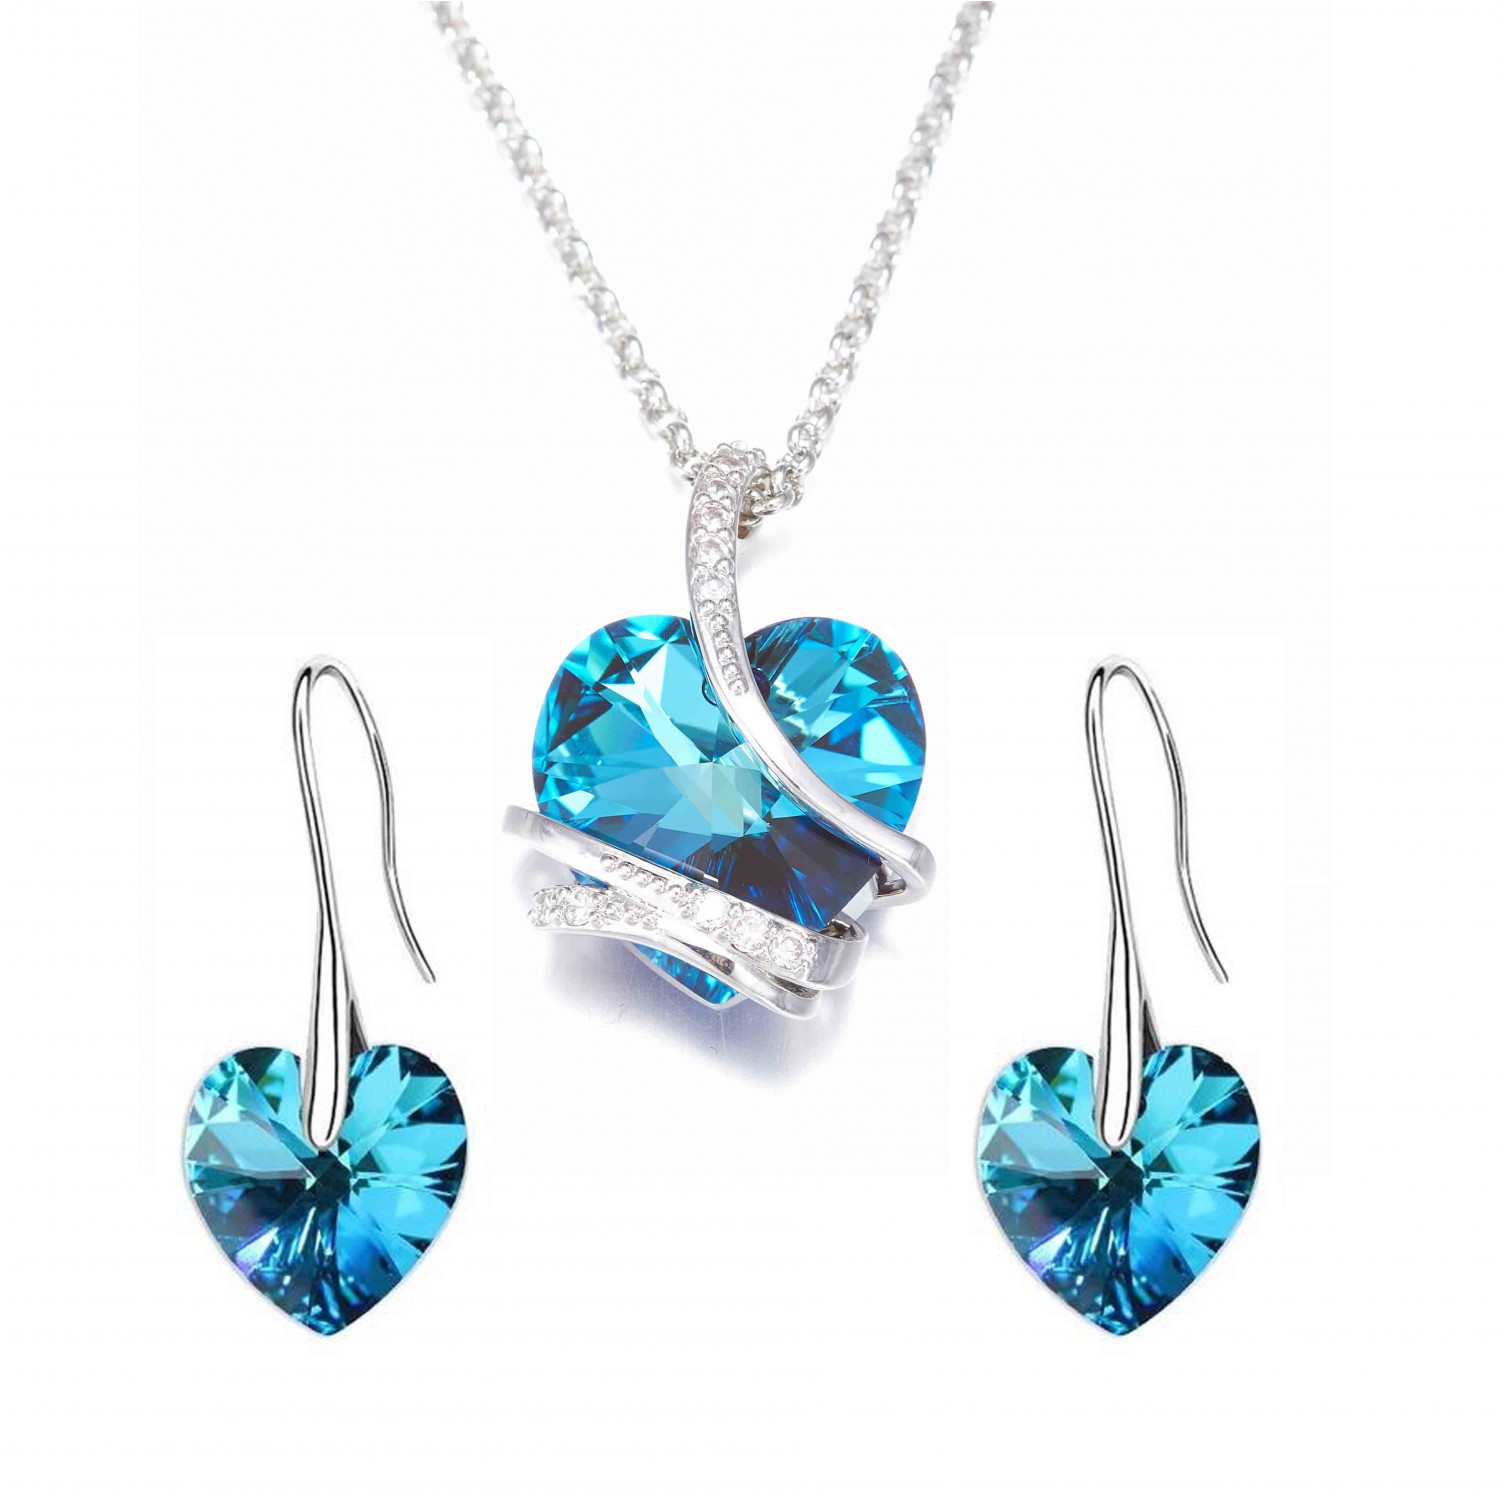 Vintage Qianse Swarovski Crystal Blue Heart Love You Forever Necklace 16